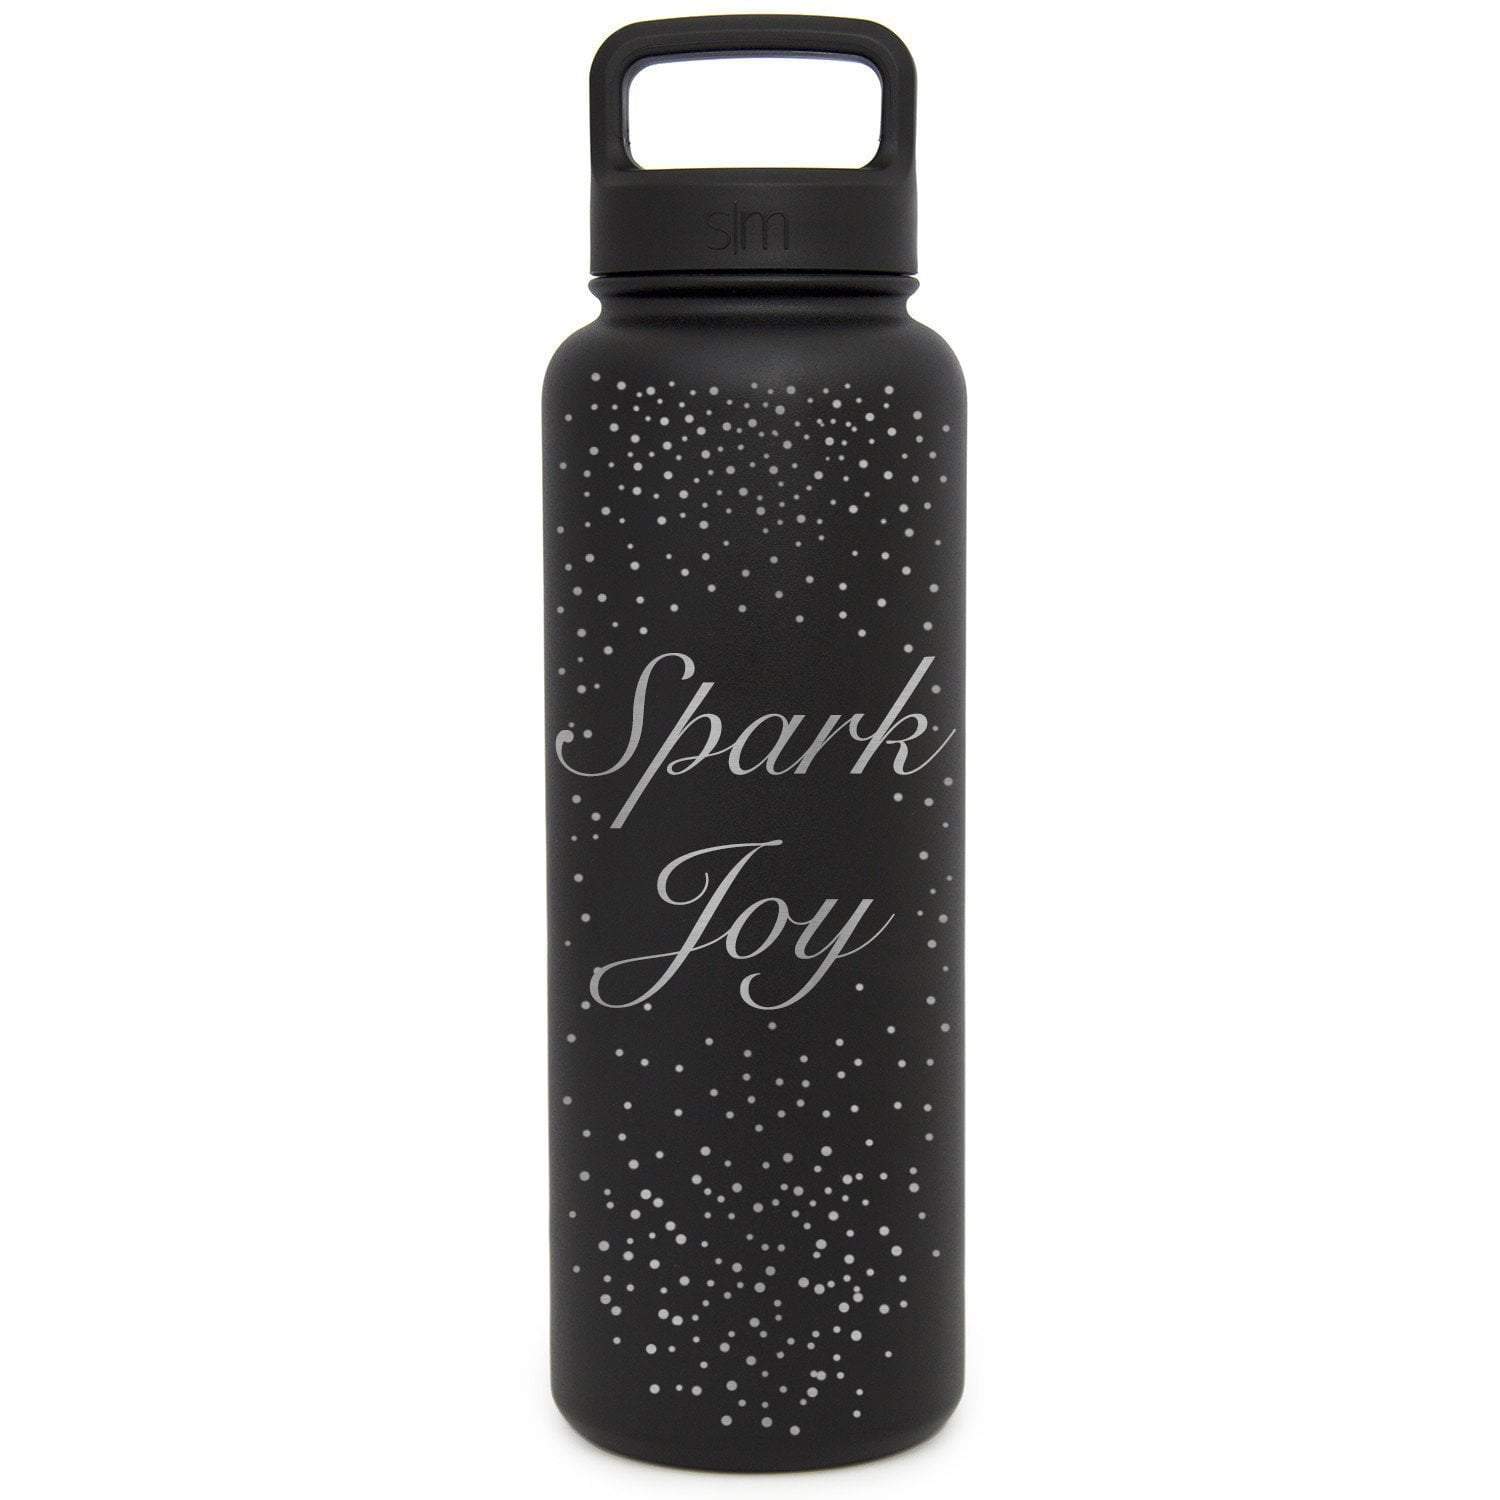 Premium Stainless Steel Water Bottle, Spark Joy Design, Extra Lid, 40oz (Midnight Black) Integrity Bottles